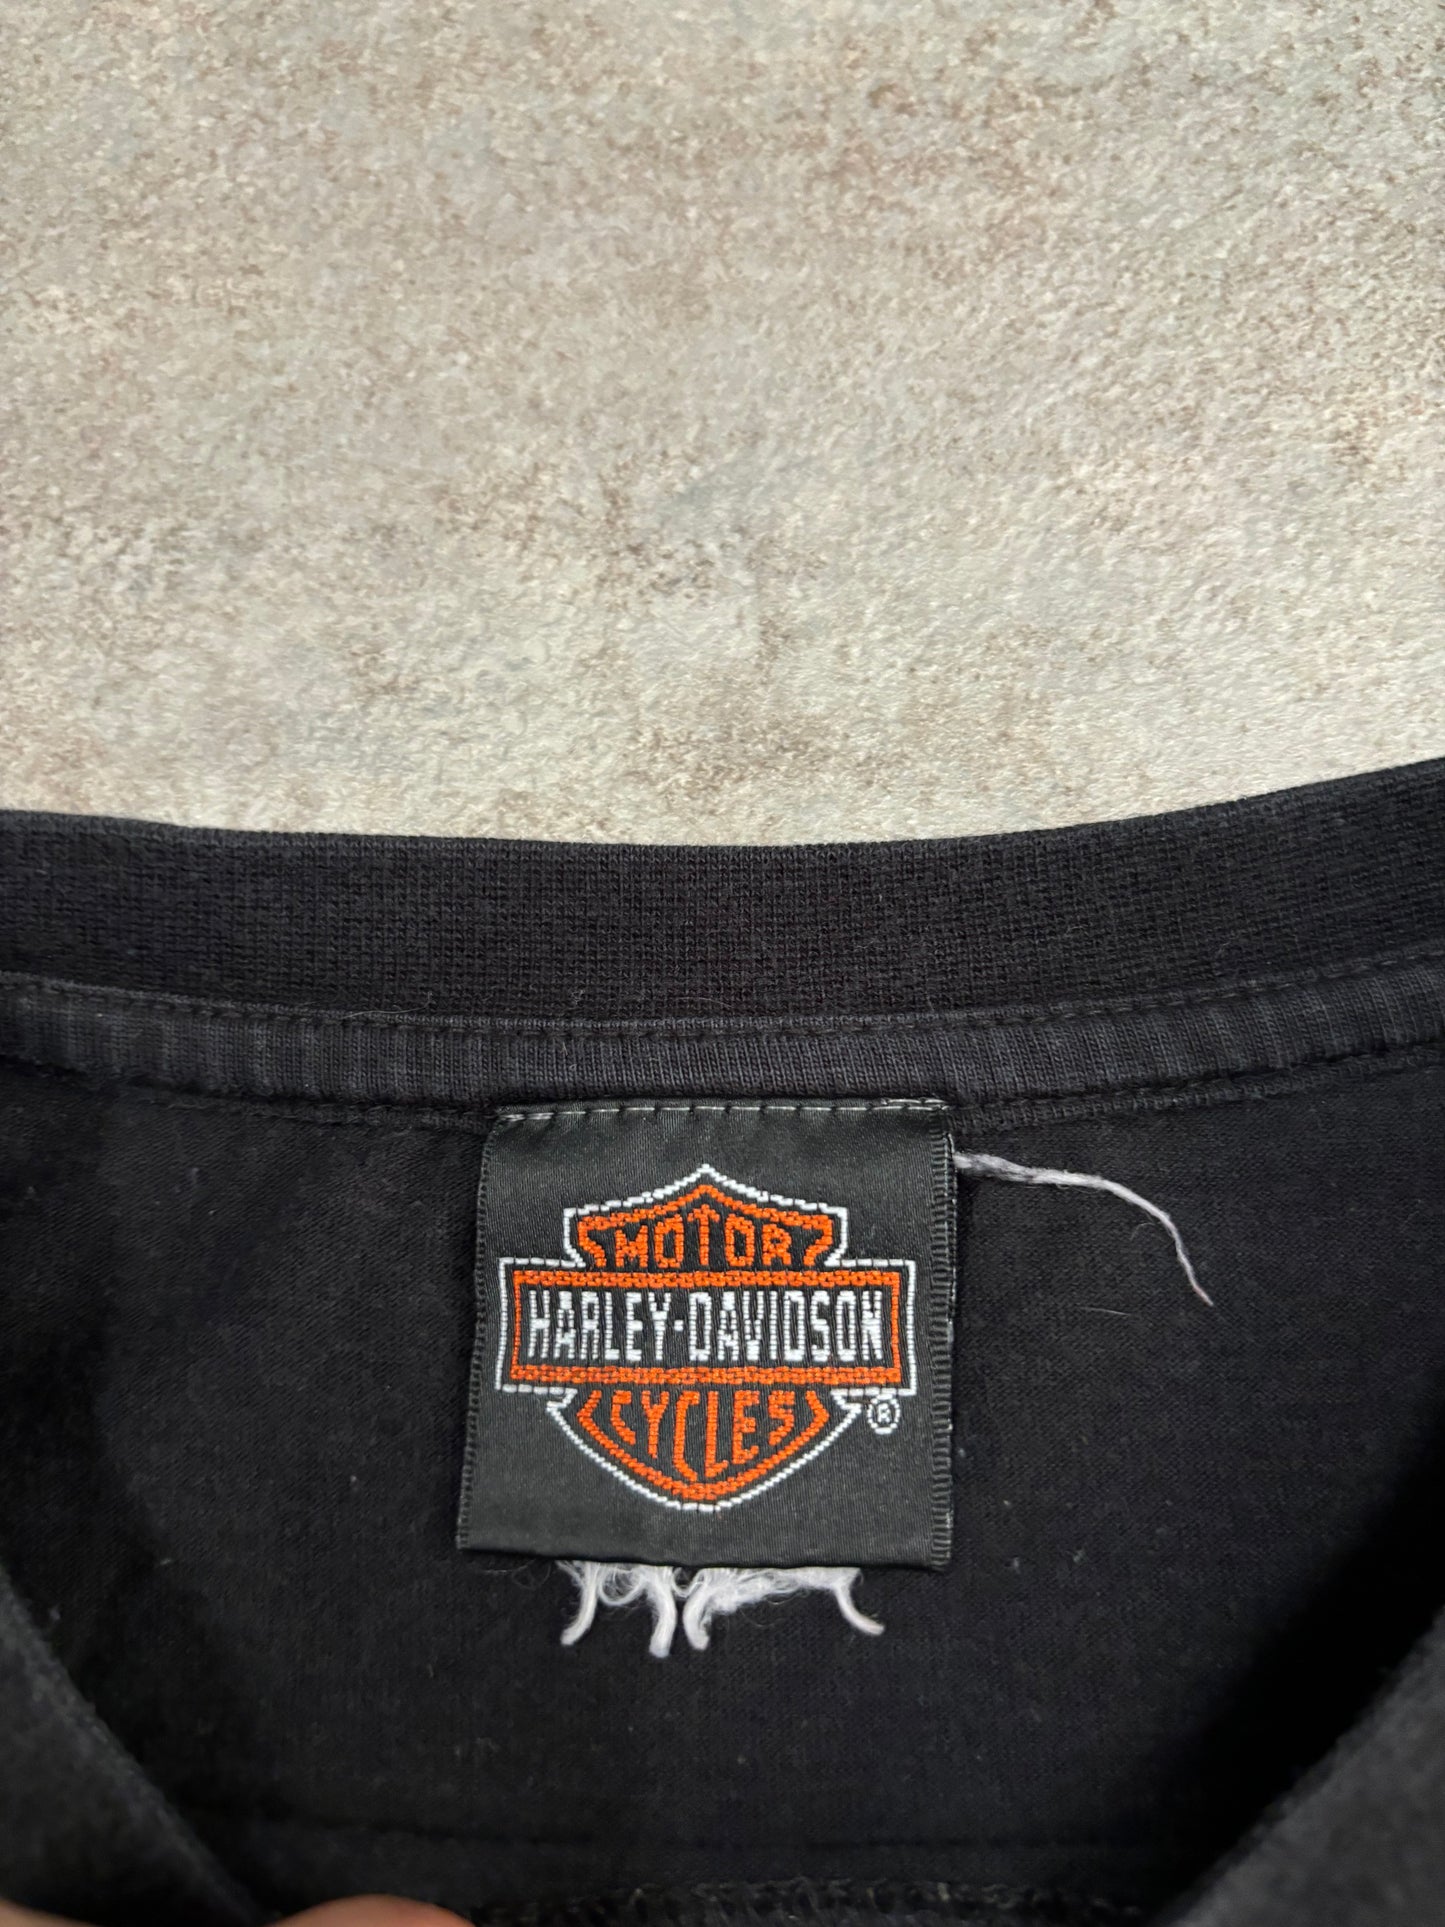 Camiseta Harley Davidson ‘Sun Faded’ New Zealand 2002 Vintage - M